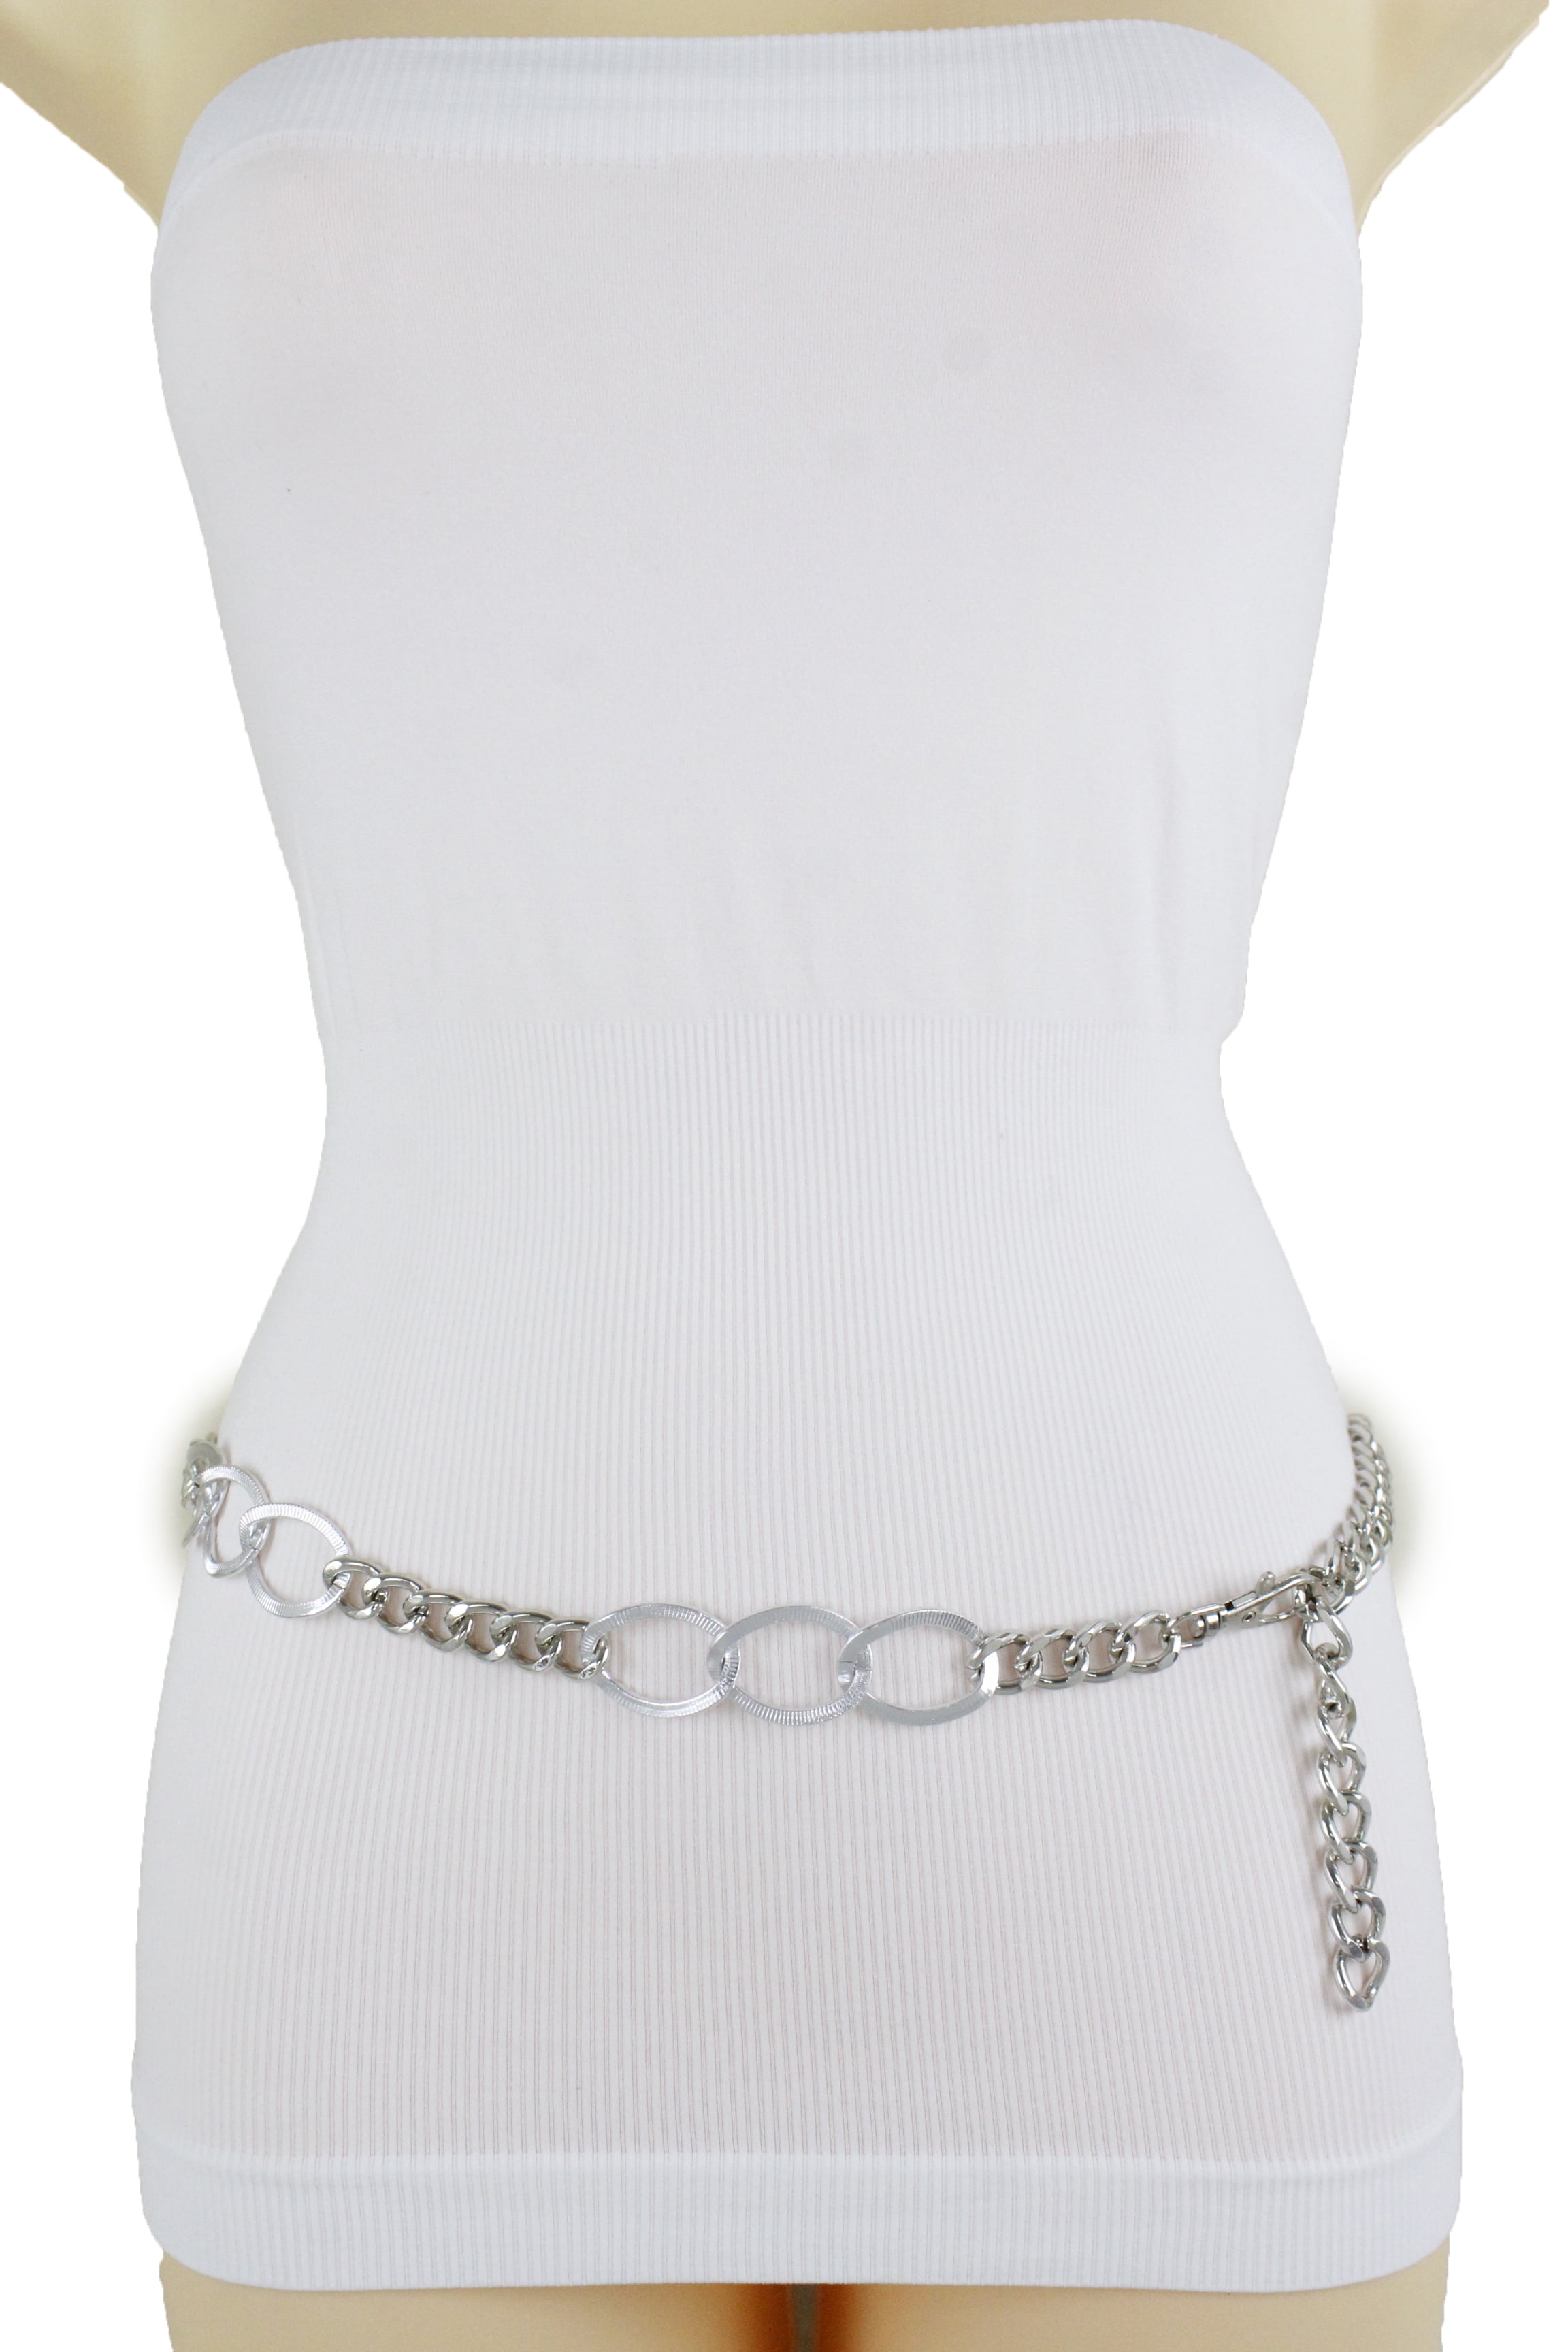 Women Silver Metal Chain Waistband Flashy Belt Tassel Charm Fringe Buckle M L XL 